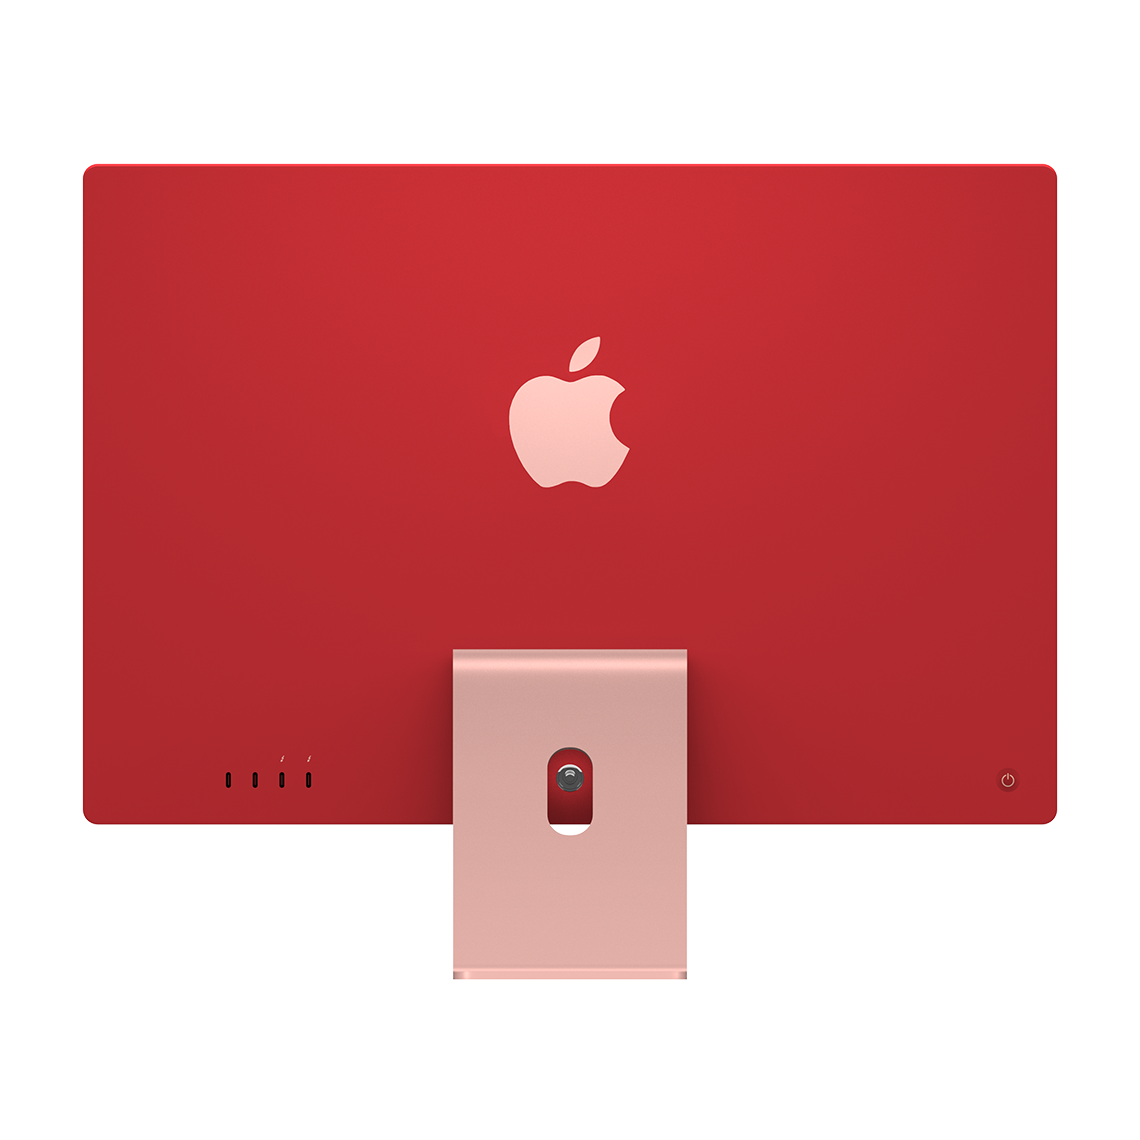 Apple M1 iMac 24-inch - Pink - 8GB RAM, 512GB Flash, 8-Core GPU, 4 Ports, Open Box